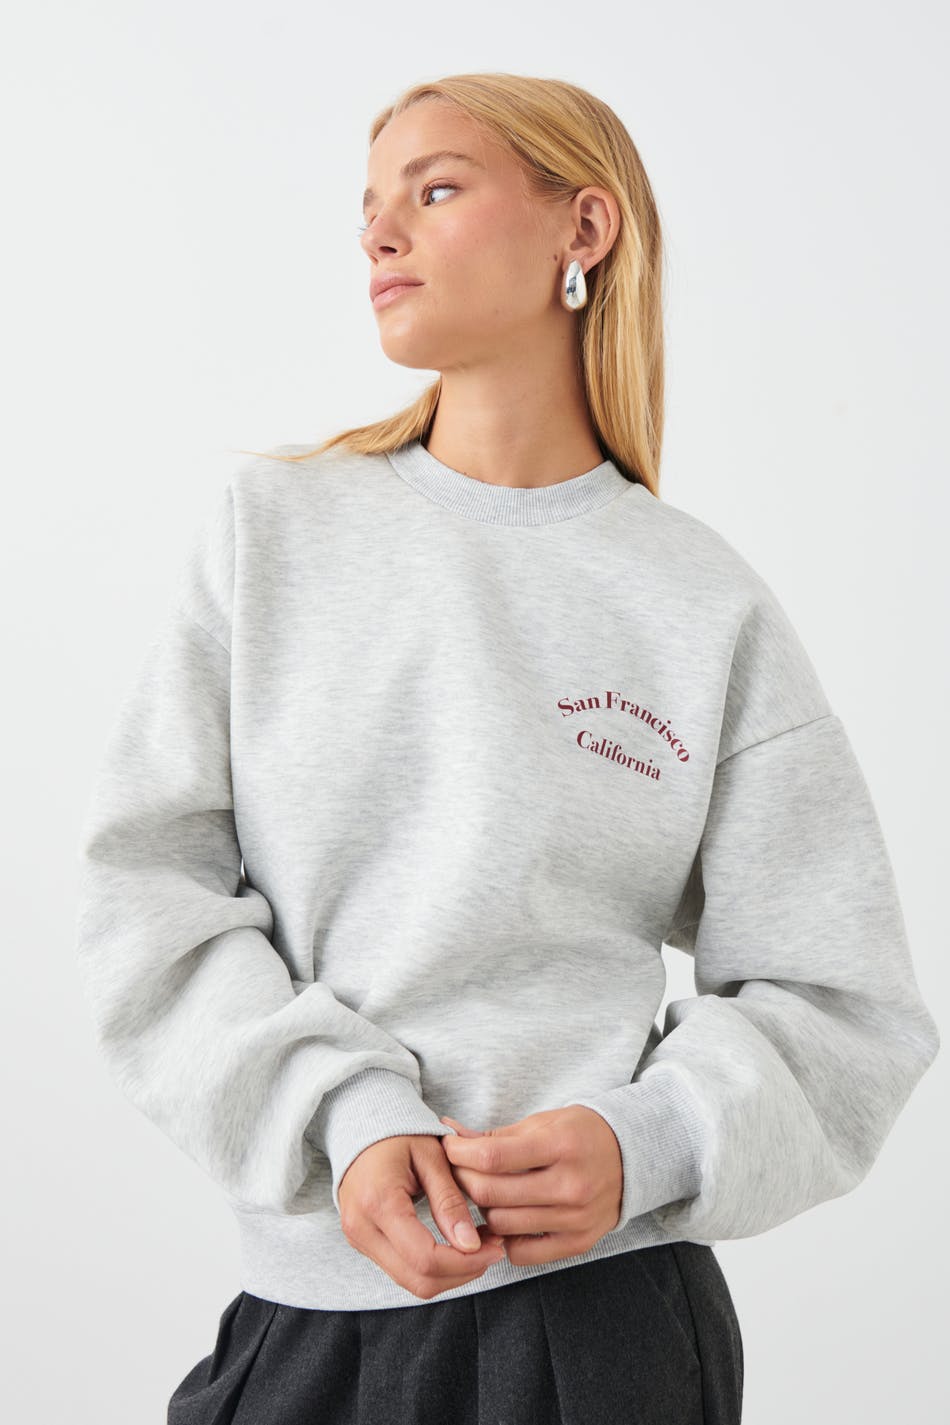 Printed sweater